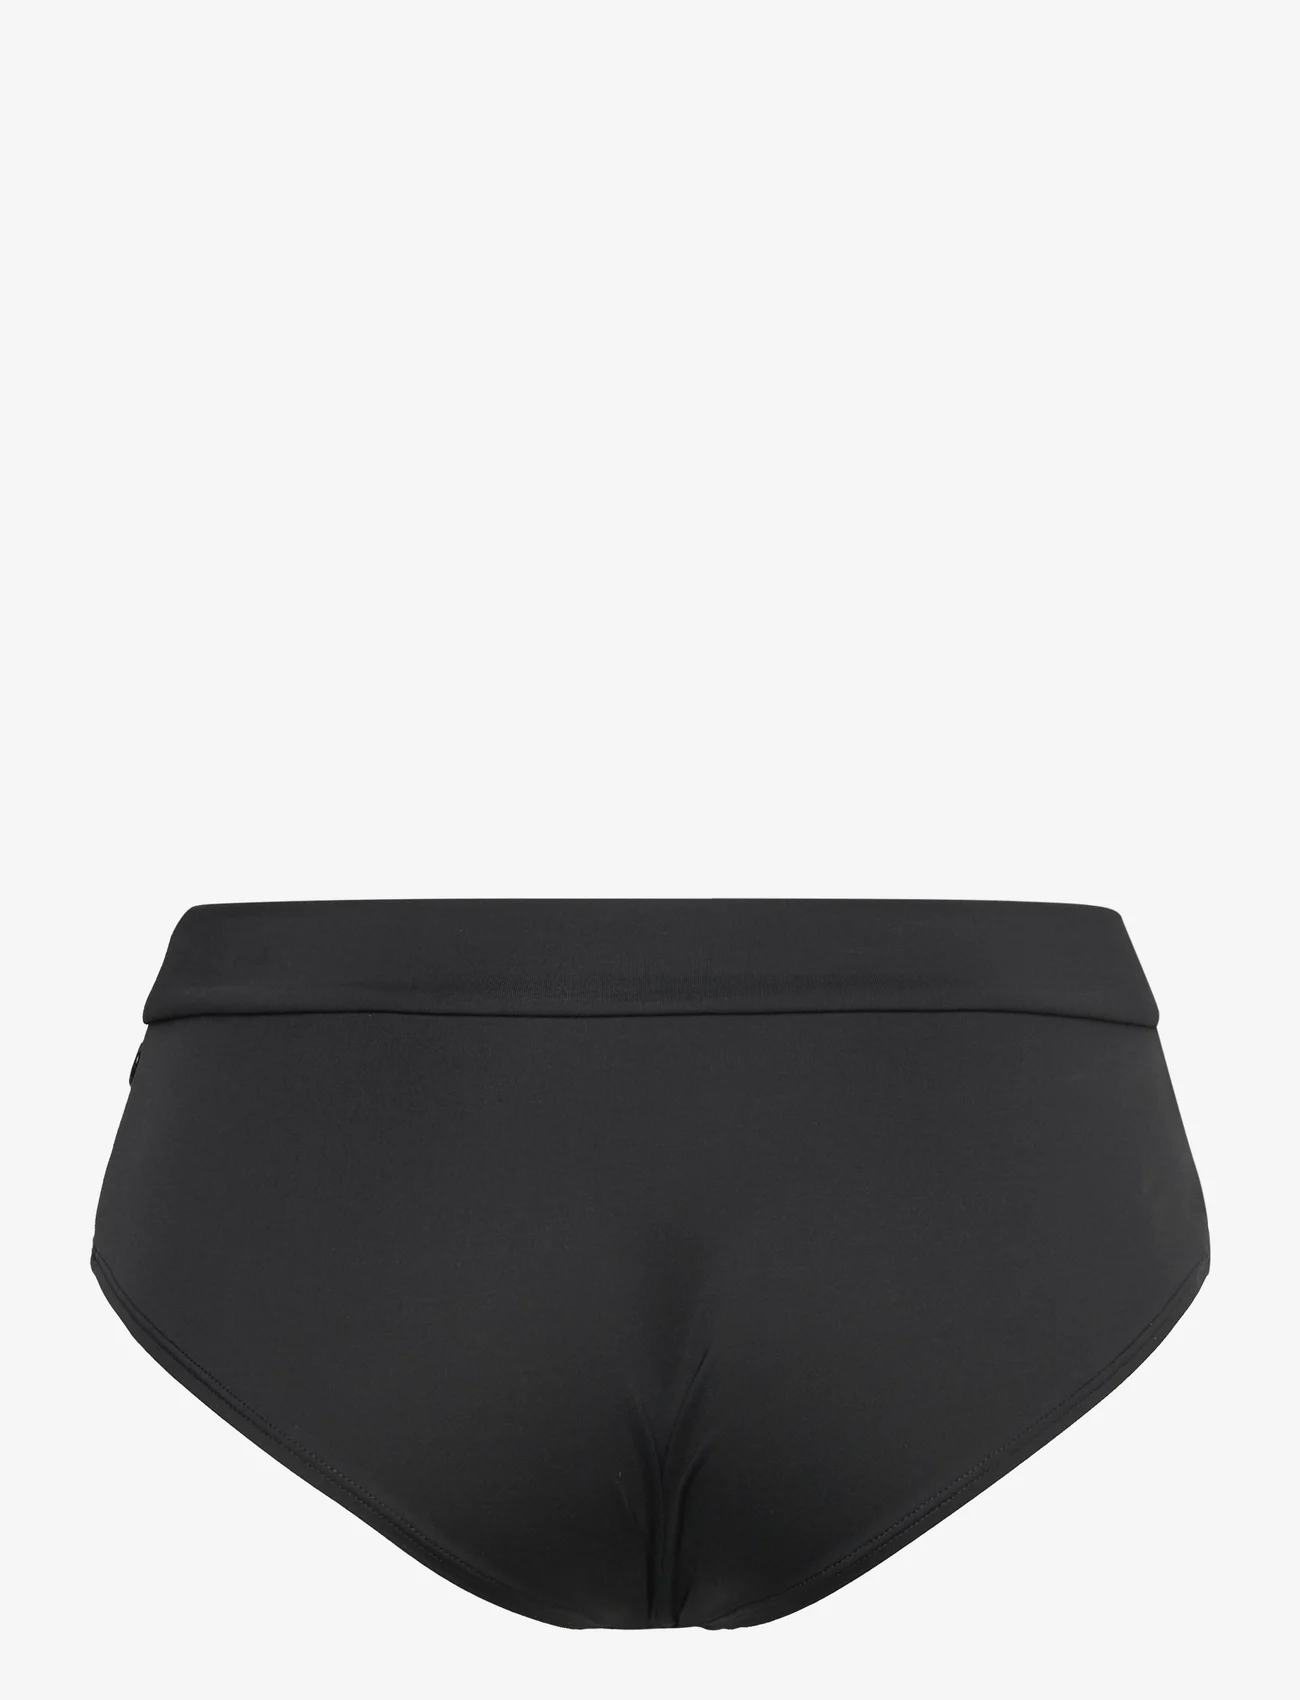 Panos Emporio - Melina Solid Bottom - bikini briefs - black - 1